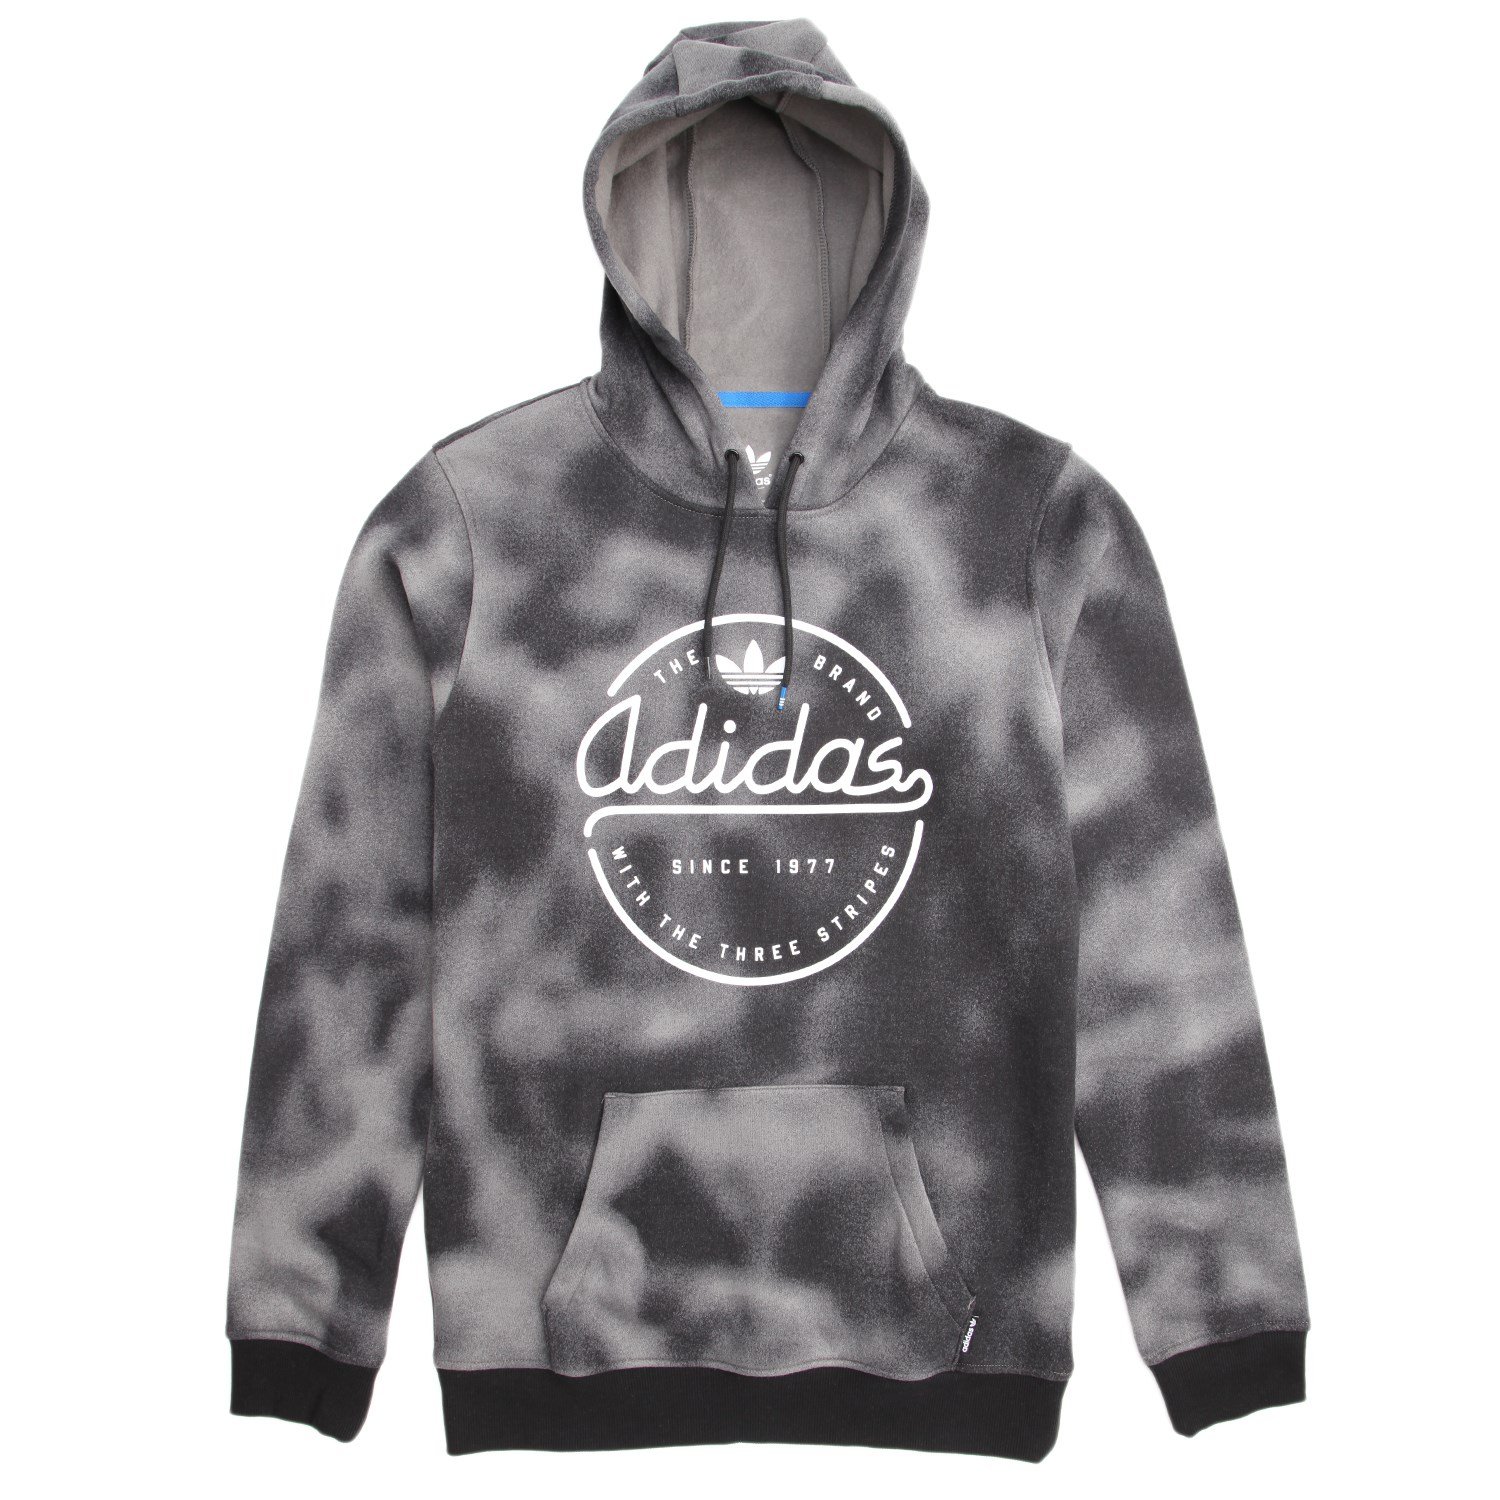 adidas creator hoodie